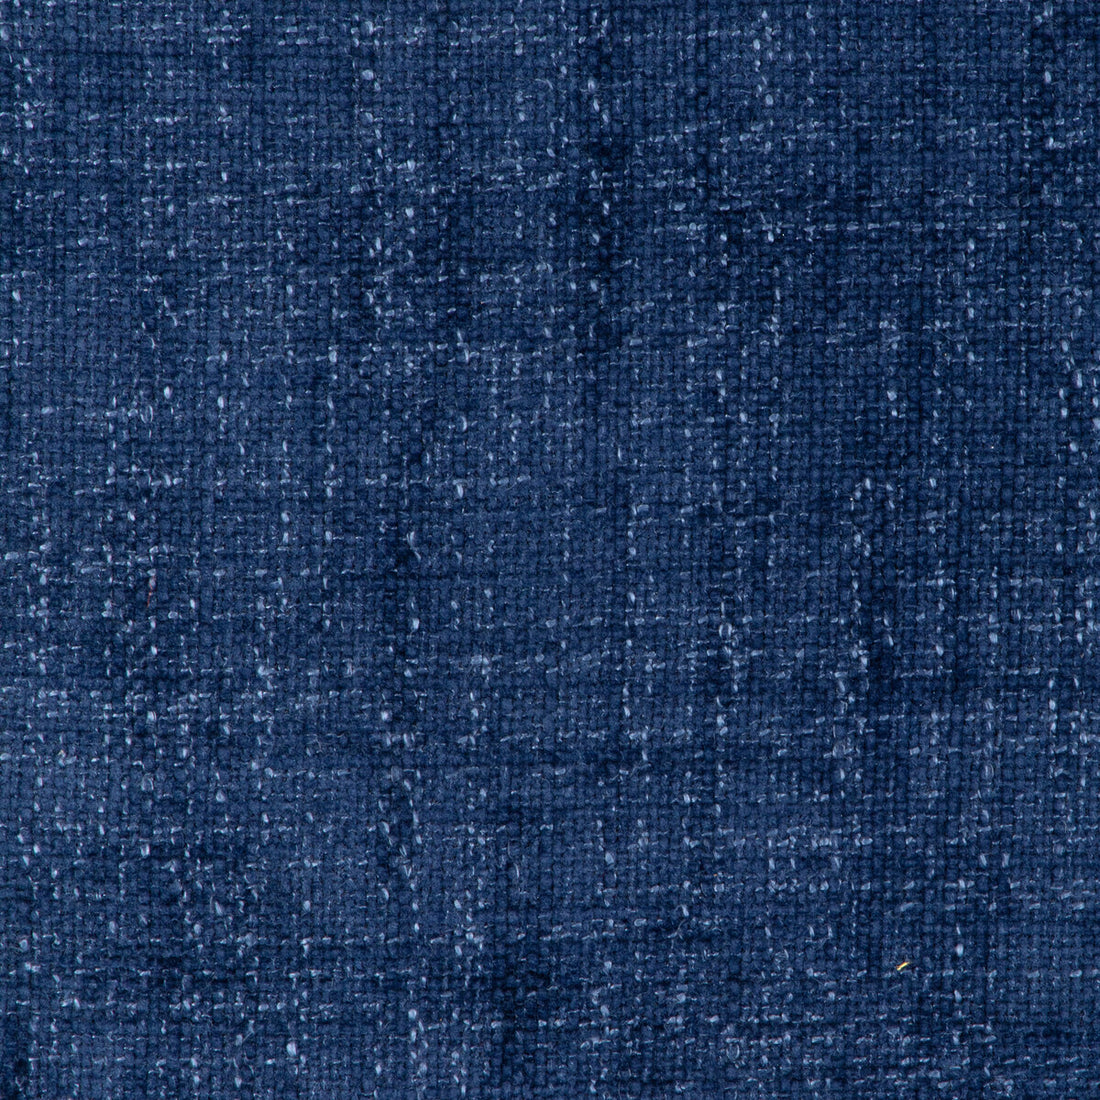 Kravet Smart fabric in 36677-50 color - pattern 36677.50.0 - by Kravet Smart in the Performance Kravetarmor collection